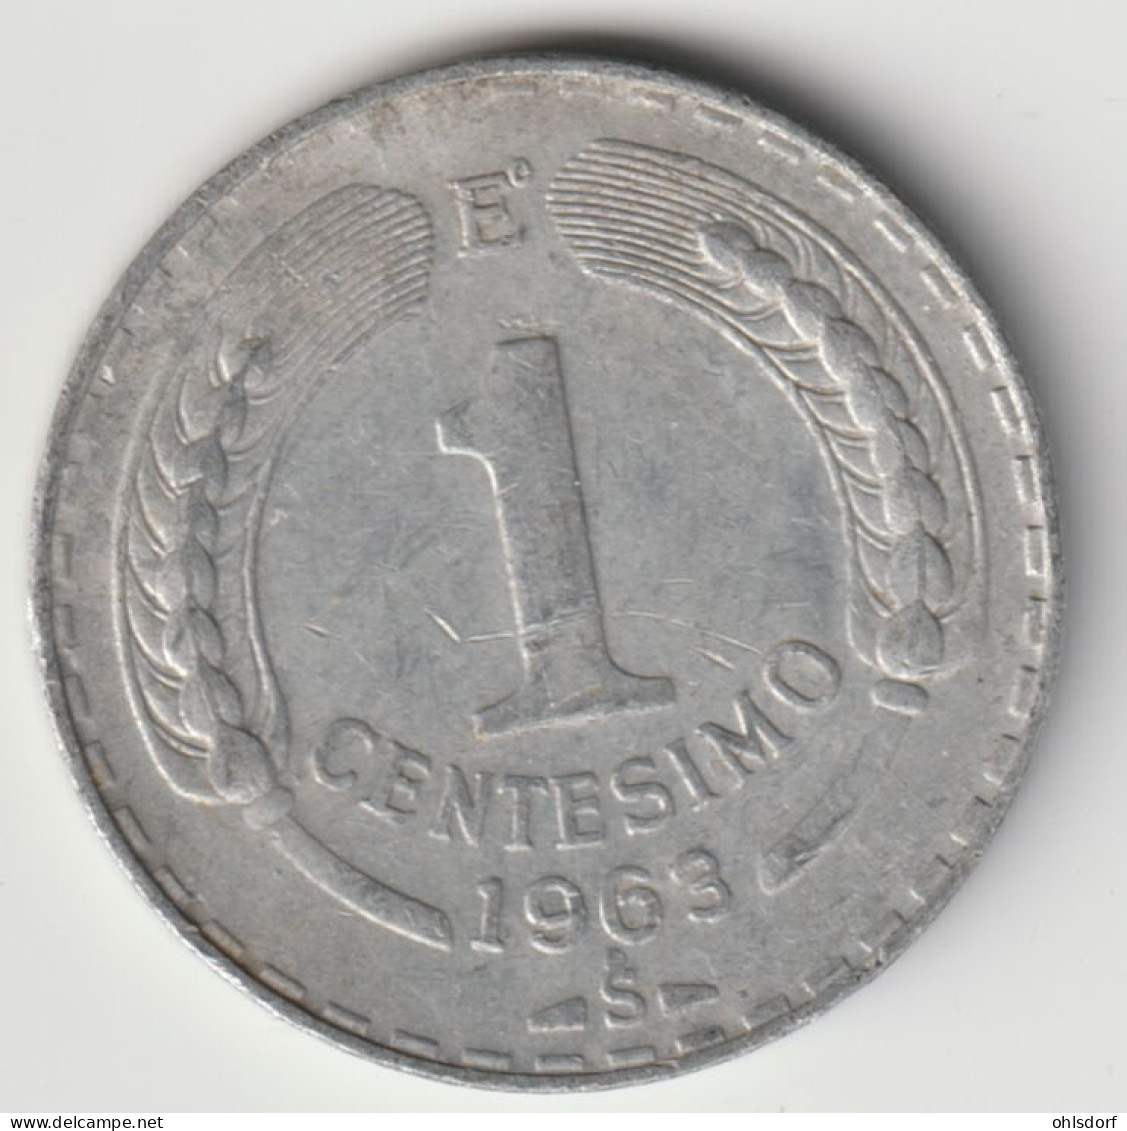 CHILE 1963: 1 Centesimo, KM 189 - Chili